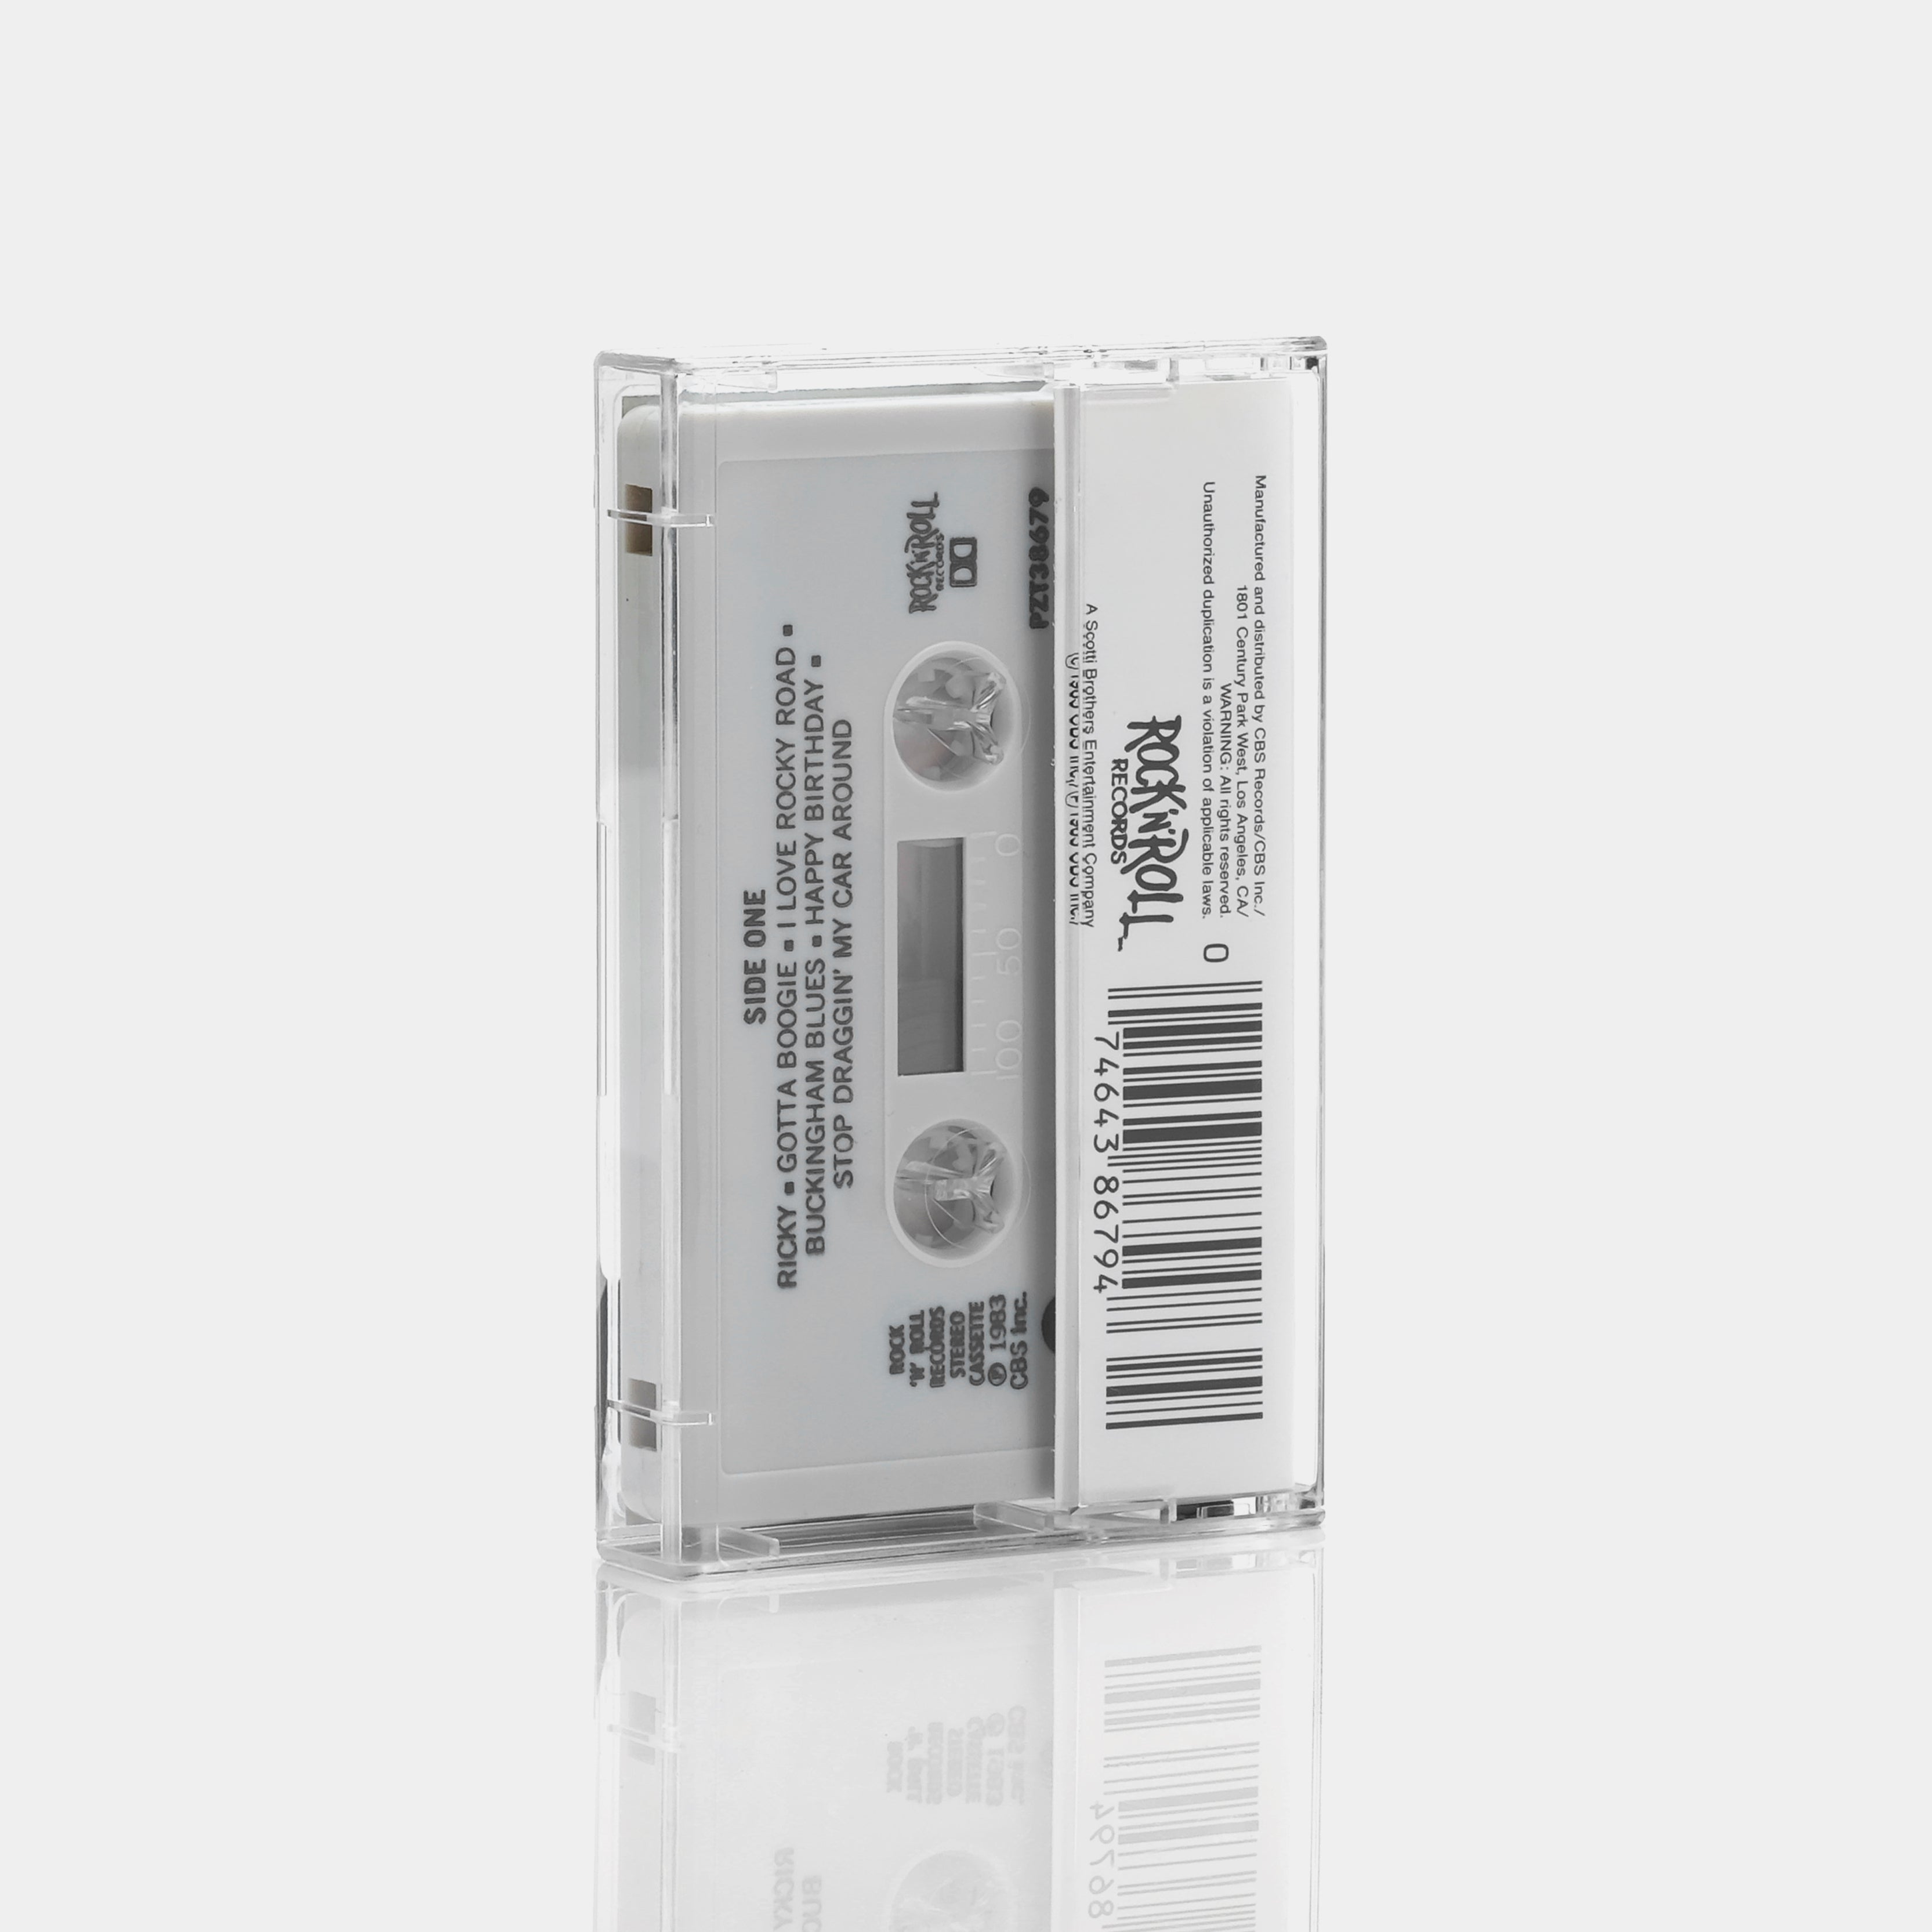 "Weird Al" Yankovic - "Weird Al" Yankovic Cassette Tape